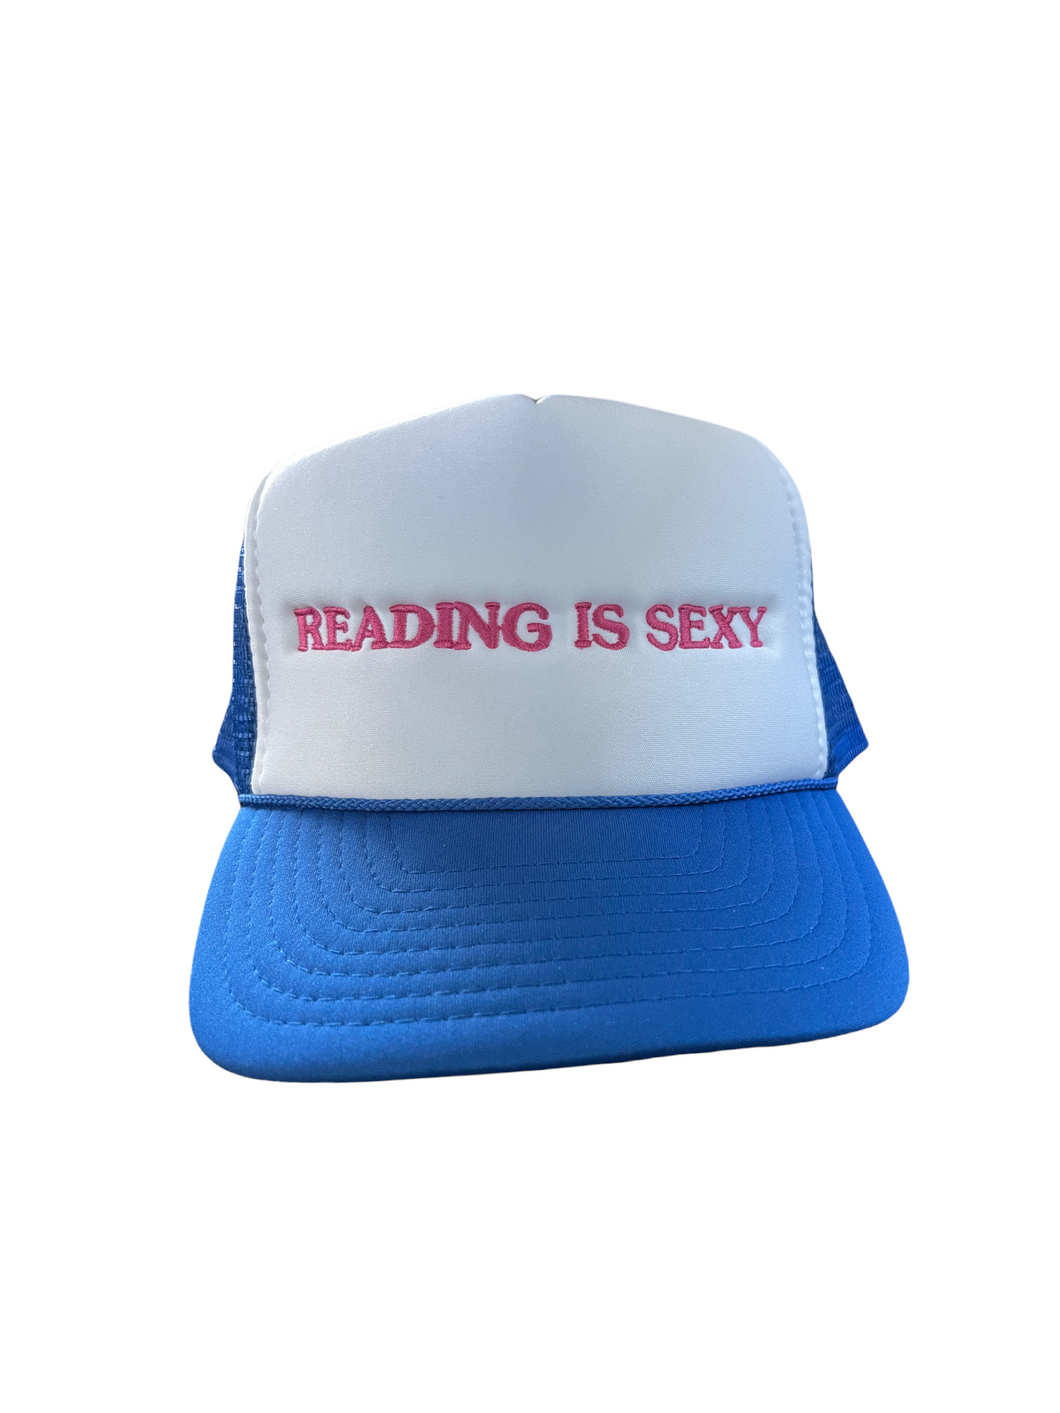 Reading is Sexy Trucker Hat - Blue